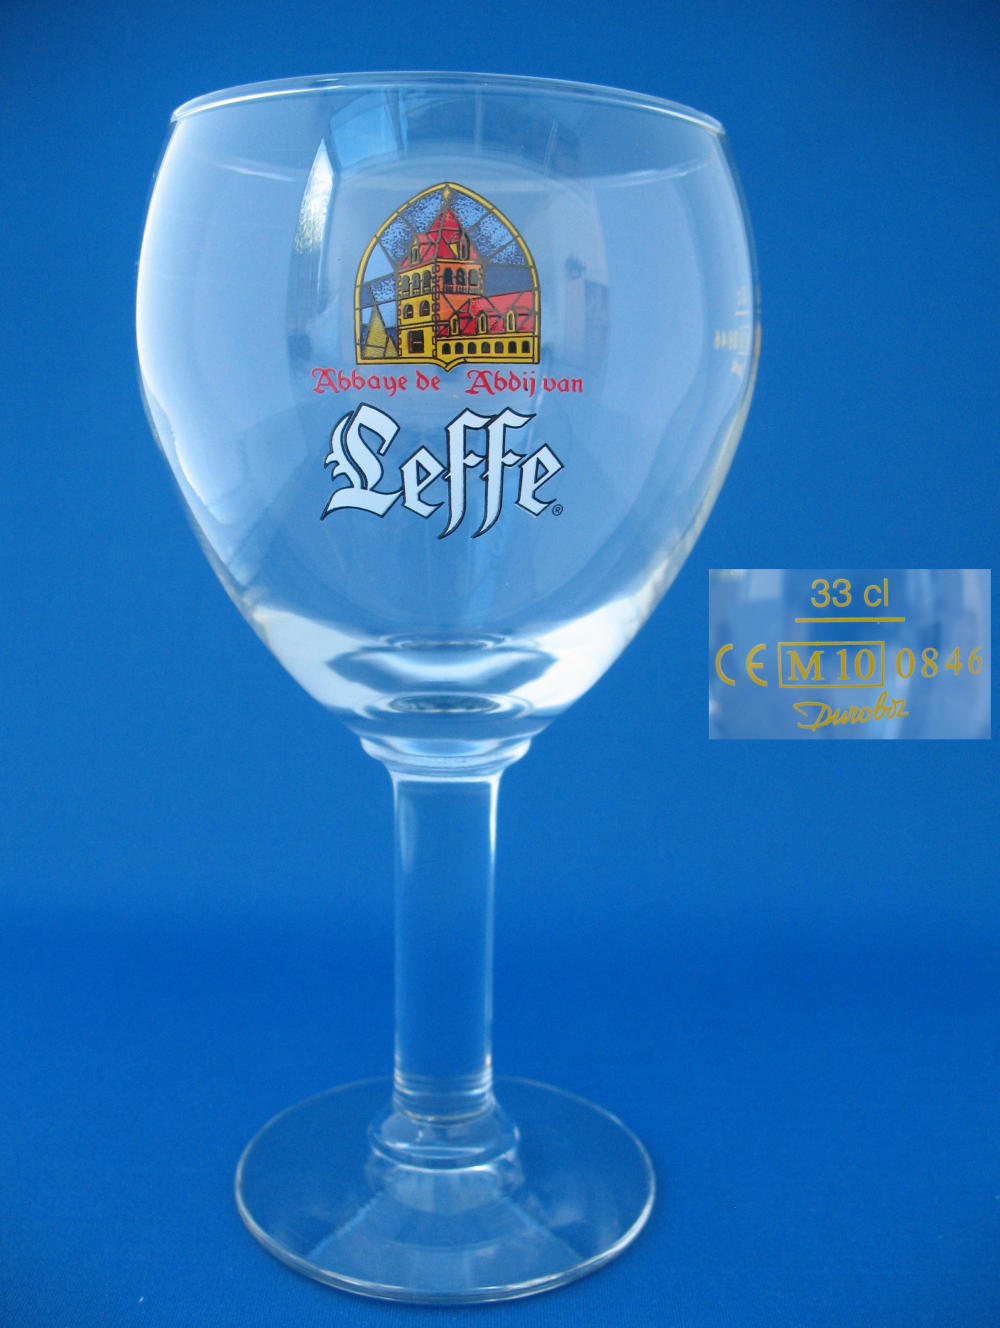 Leffe Beer Glass 000337B017